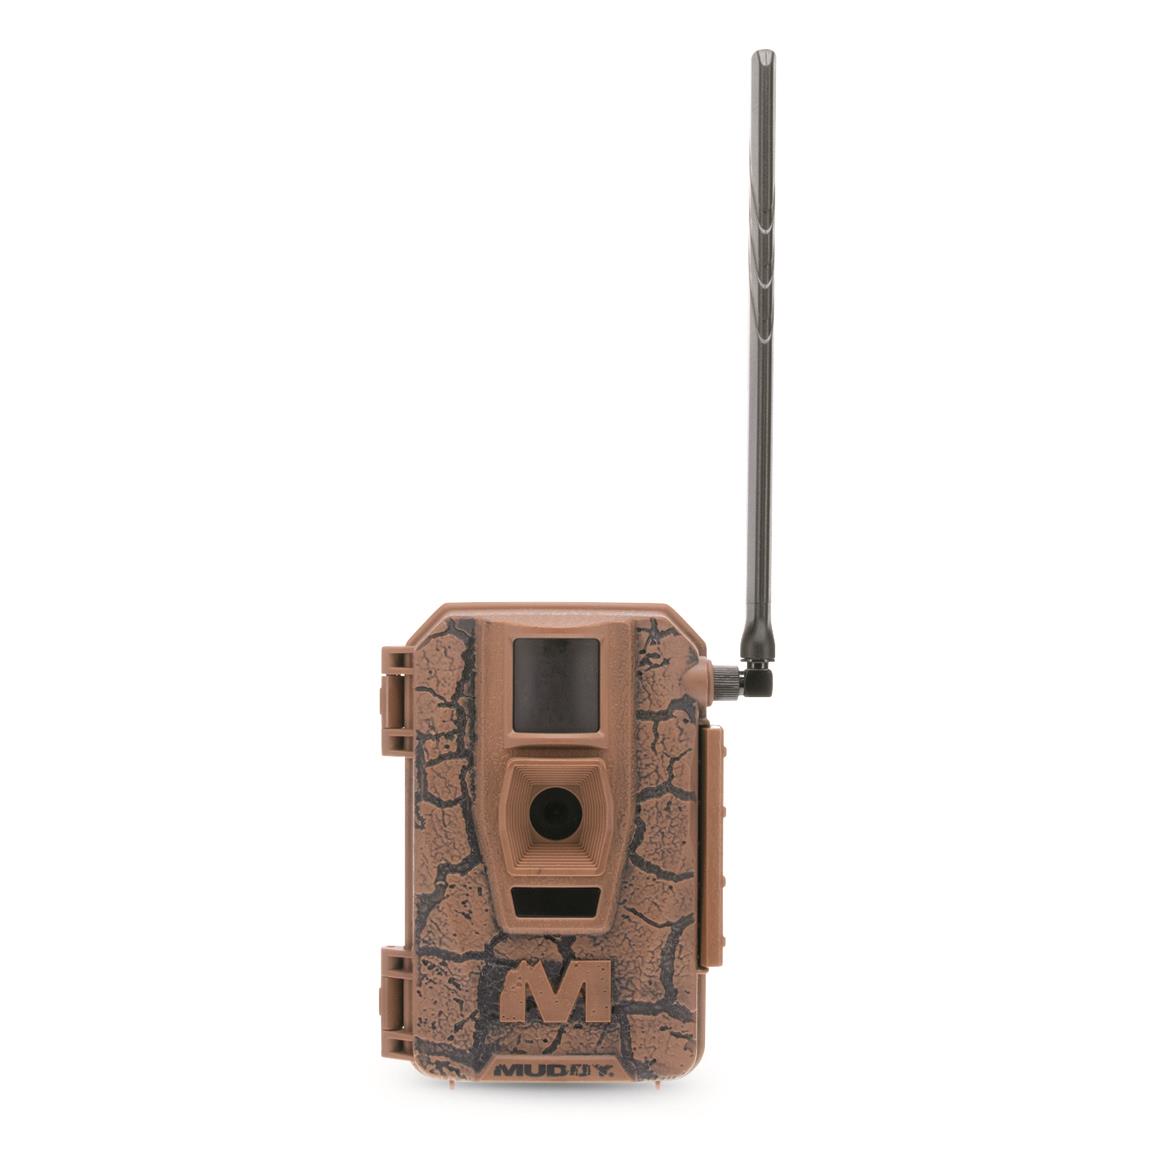 Muddy Mitigator Dual Network Cellular Trail/Game Camera, 24MP